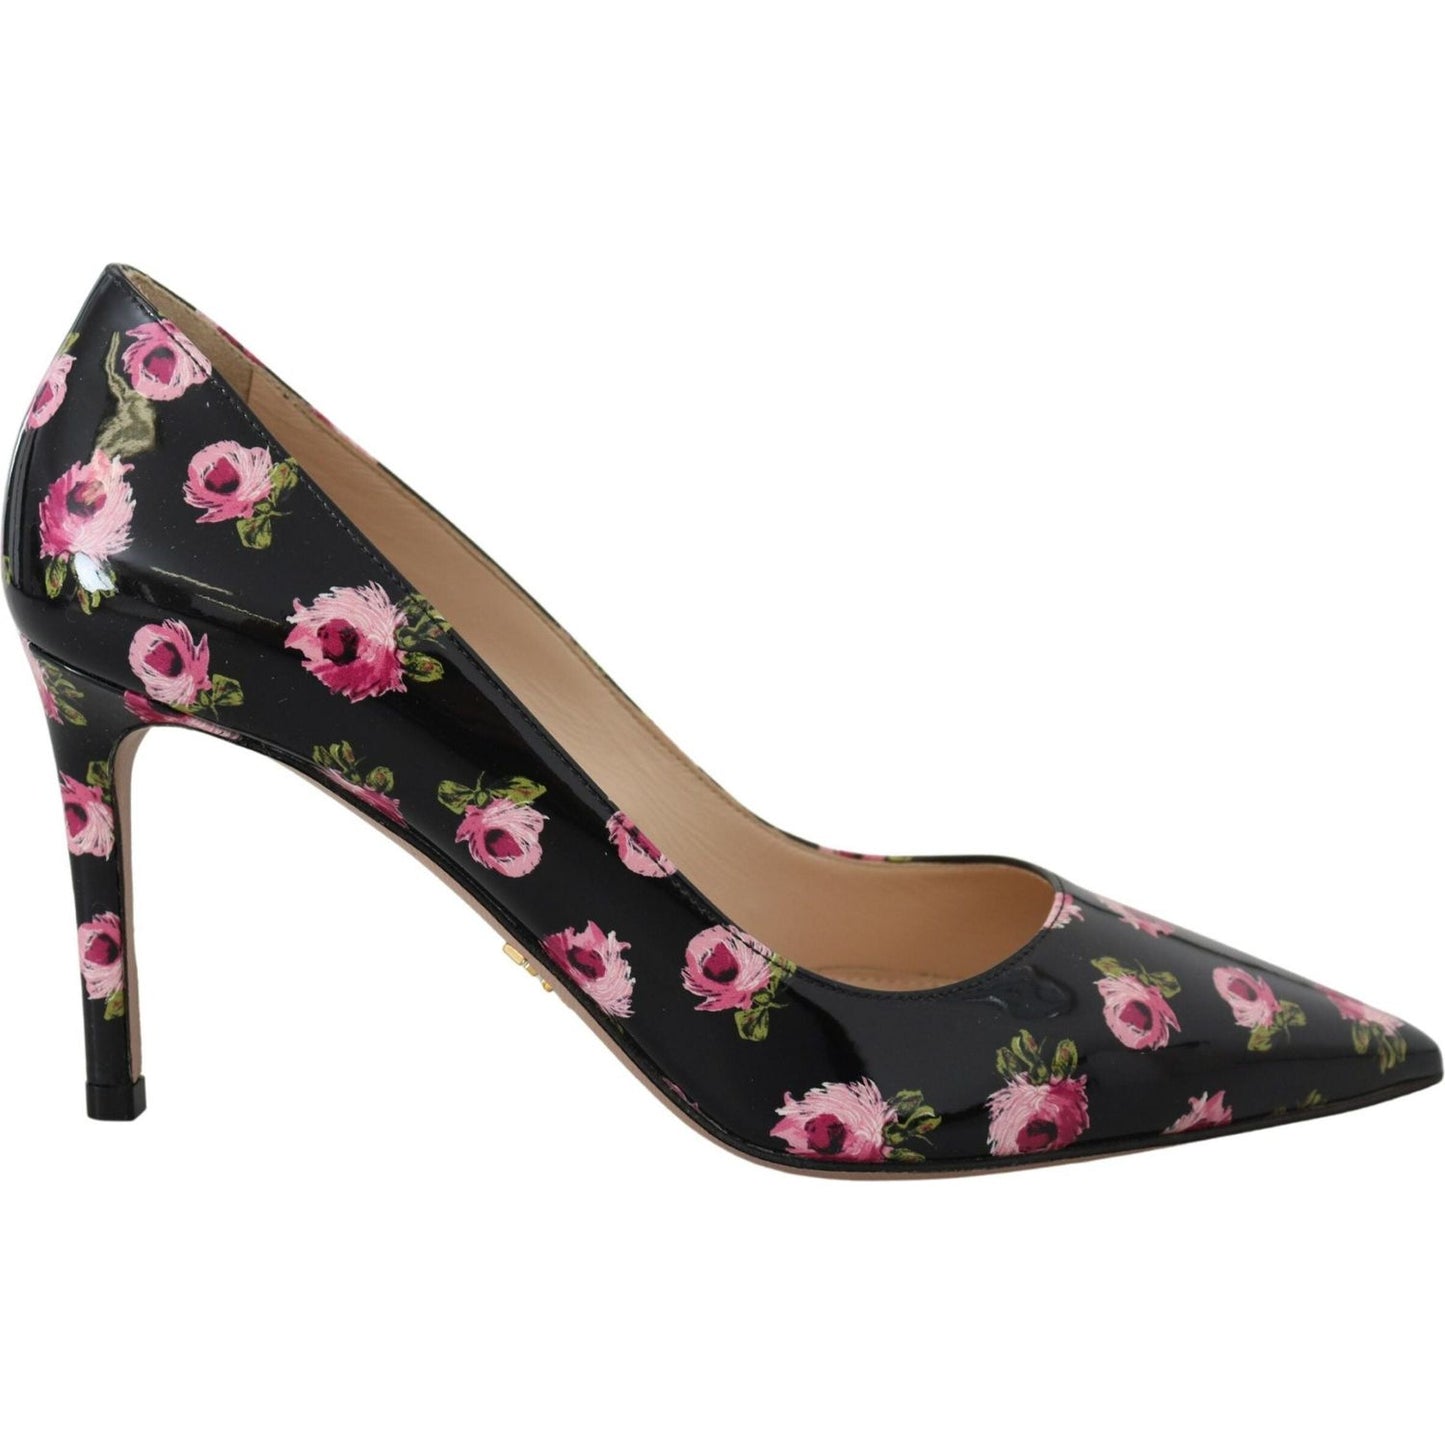 Prada Elegant Floral Print Leather Pumps black-leather-floral-heels-stilettos-pumps IMG_8309-scaled-6443e1d1-7ae.jpg